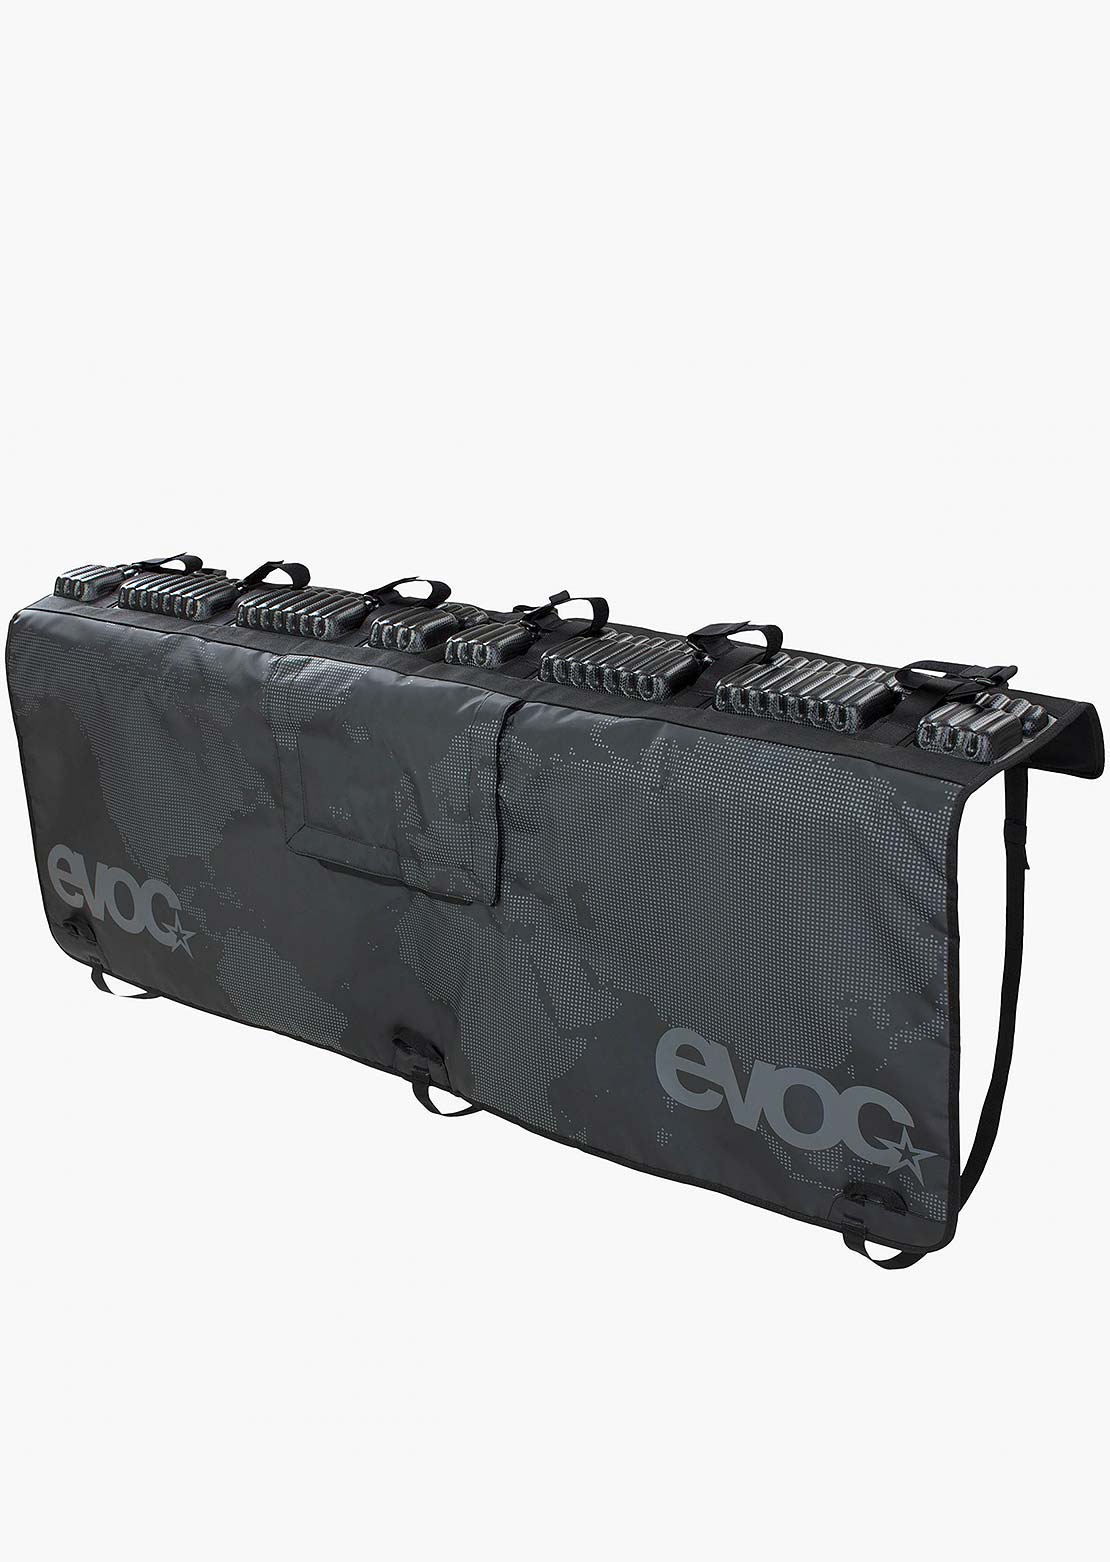 Evoc Pickup Box Panel Protector Tailgate Pad - 160cm Black